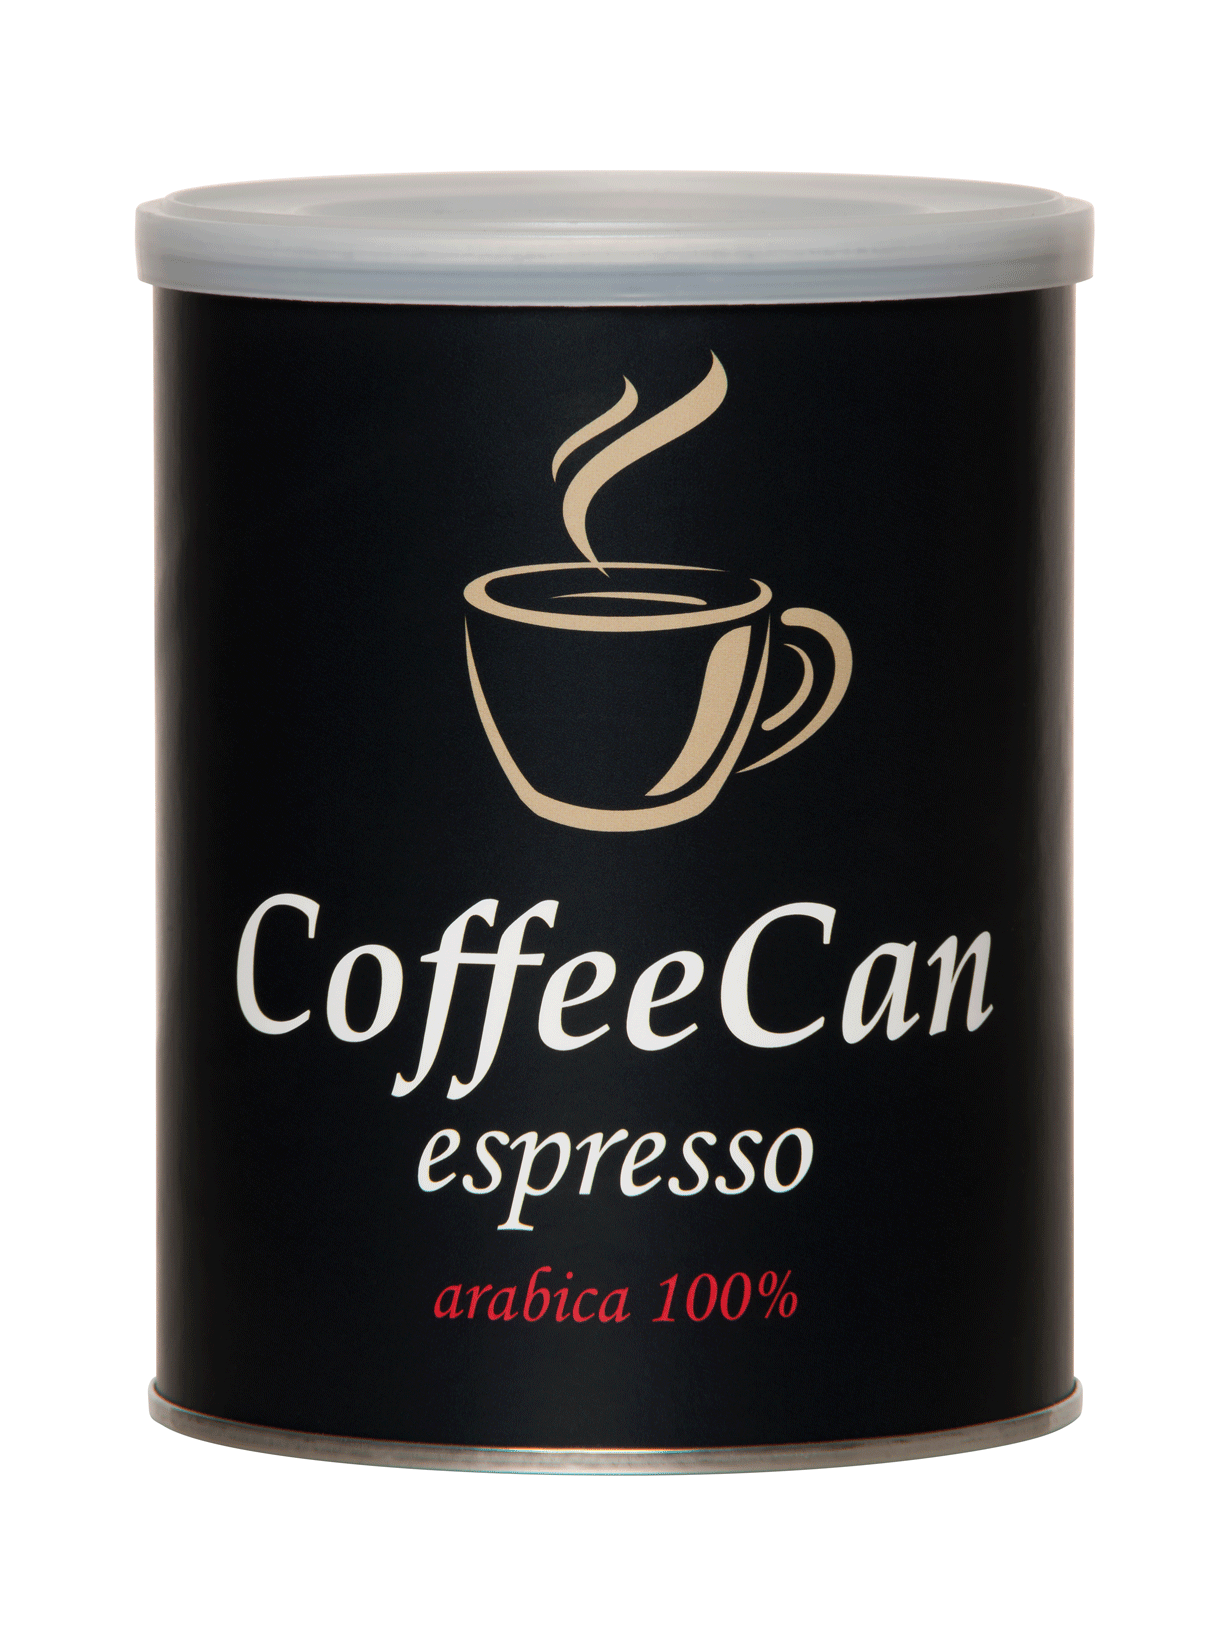 Can i have any coffee. Coffee can. Кофе Роаст. Кофе альденте. SCO кофе.